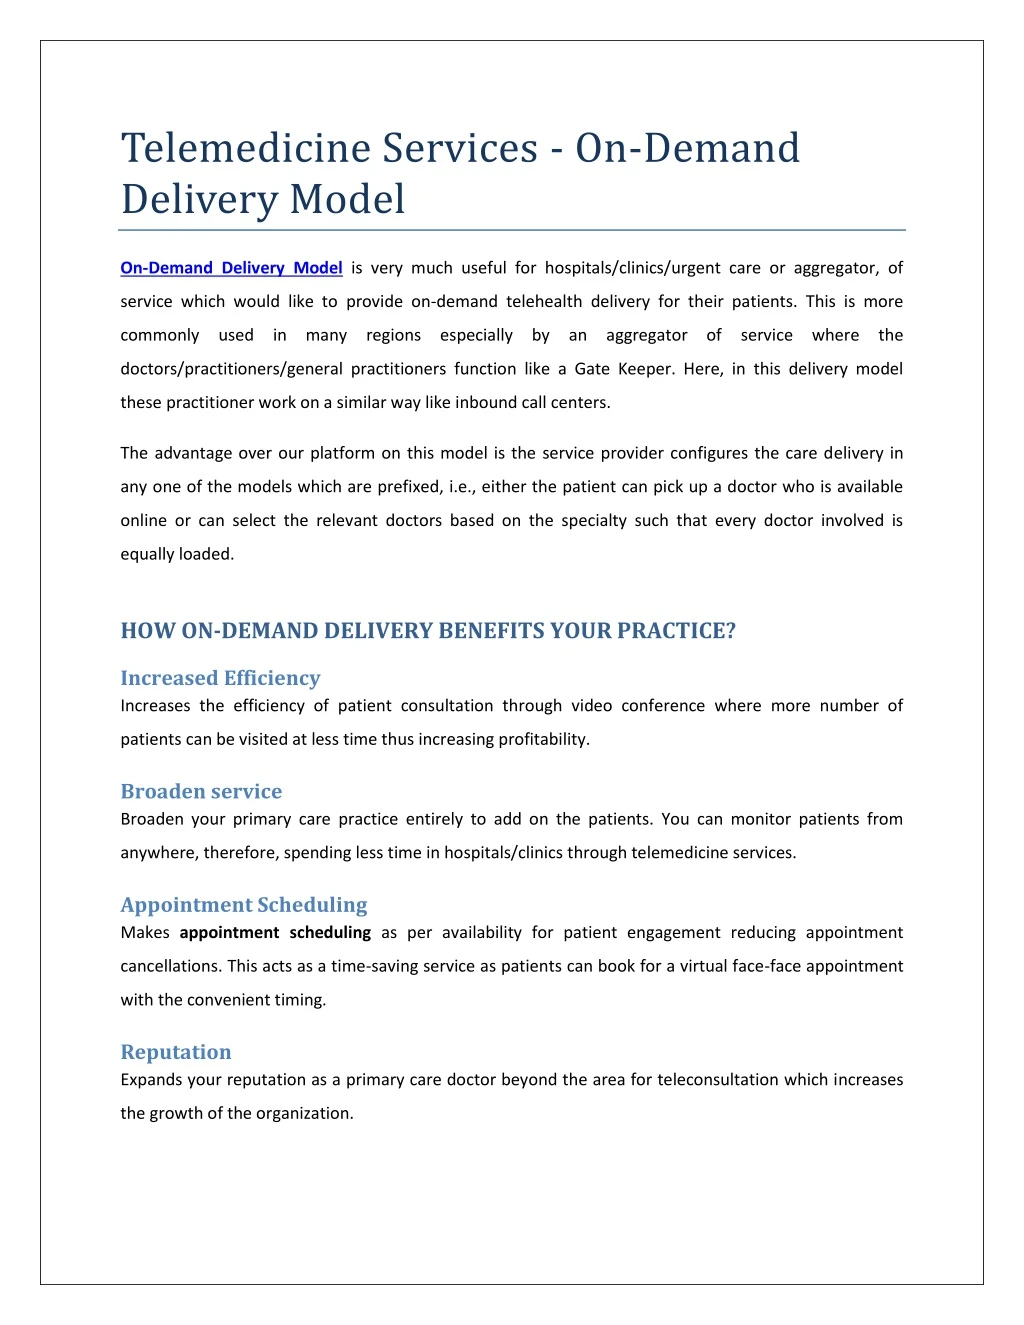 telemedicine services on demand delivery model